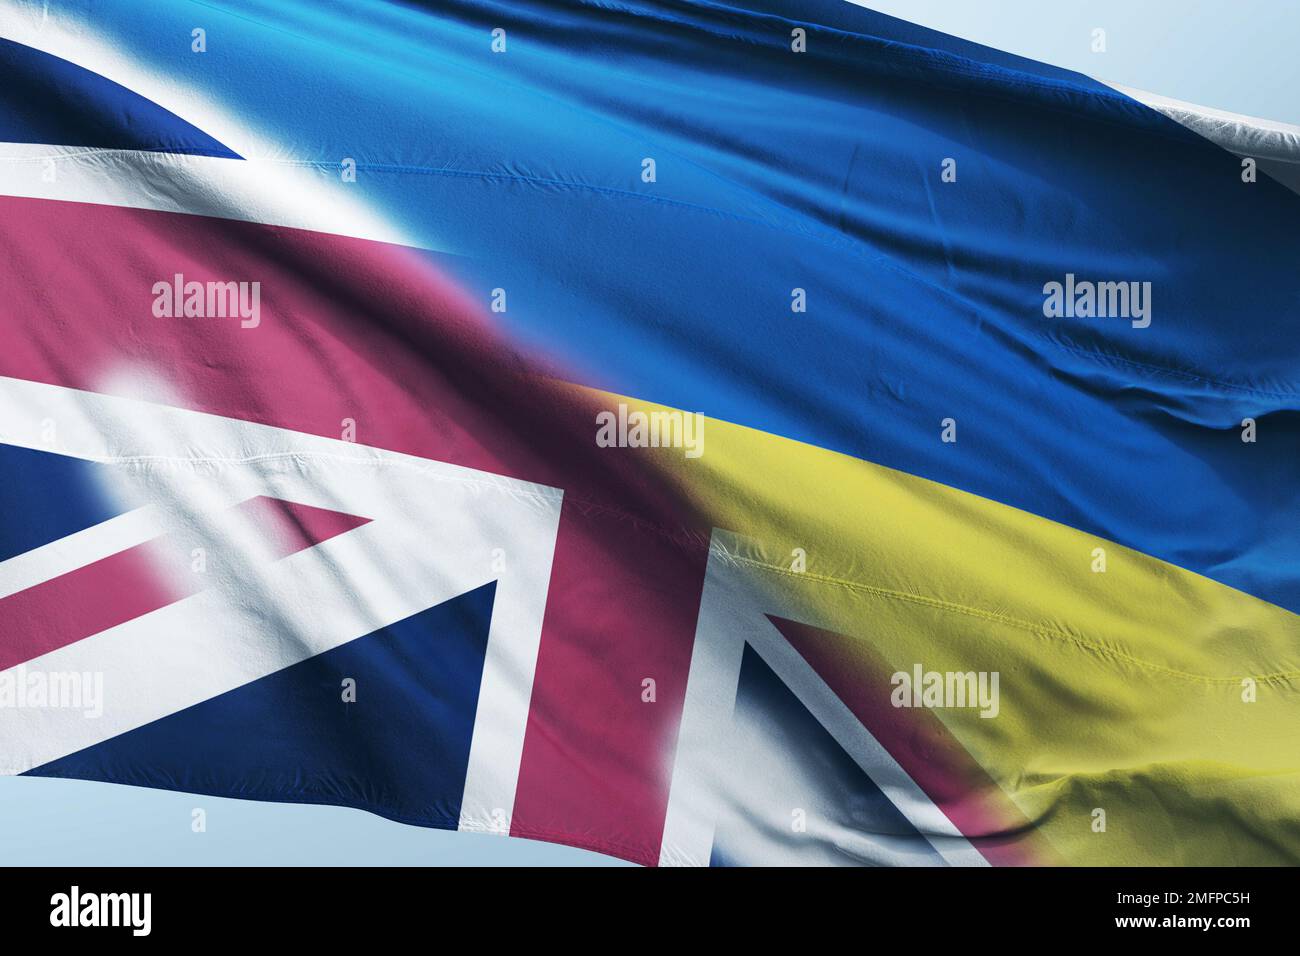 brittish ukrainia BritishUkrainian Aid supports people suffering from the war and humanitarian crisis in Ukraine by aligning UK and Ukrainian efforts. Stock Photo